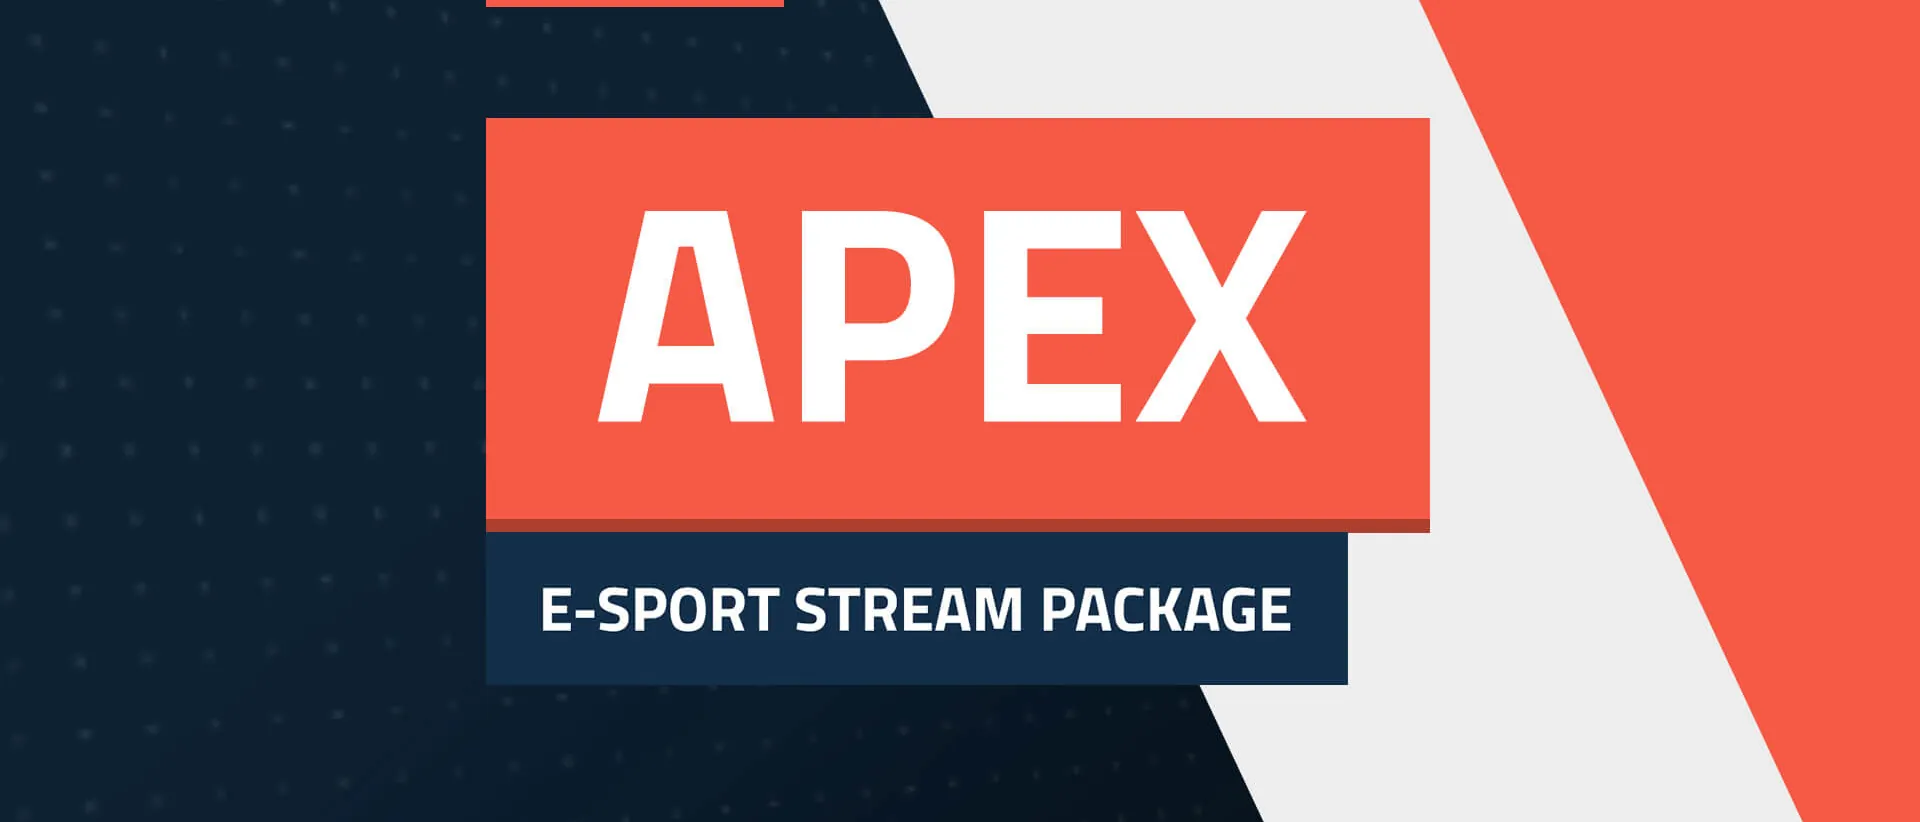 Apex E-Sport Stream Package